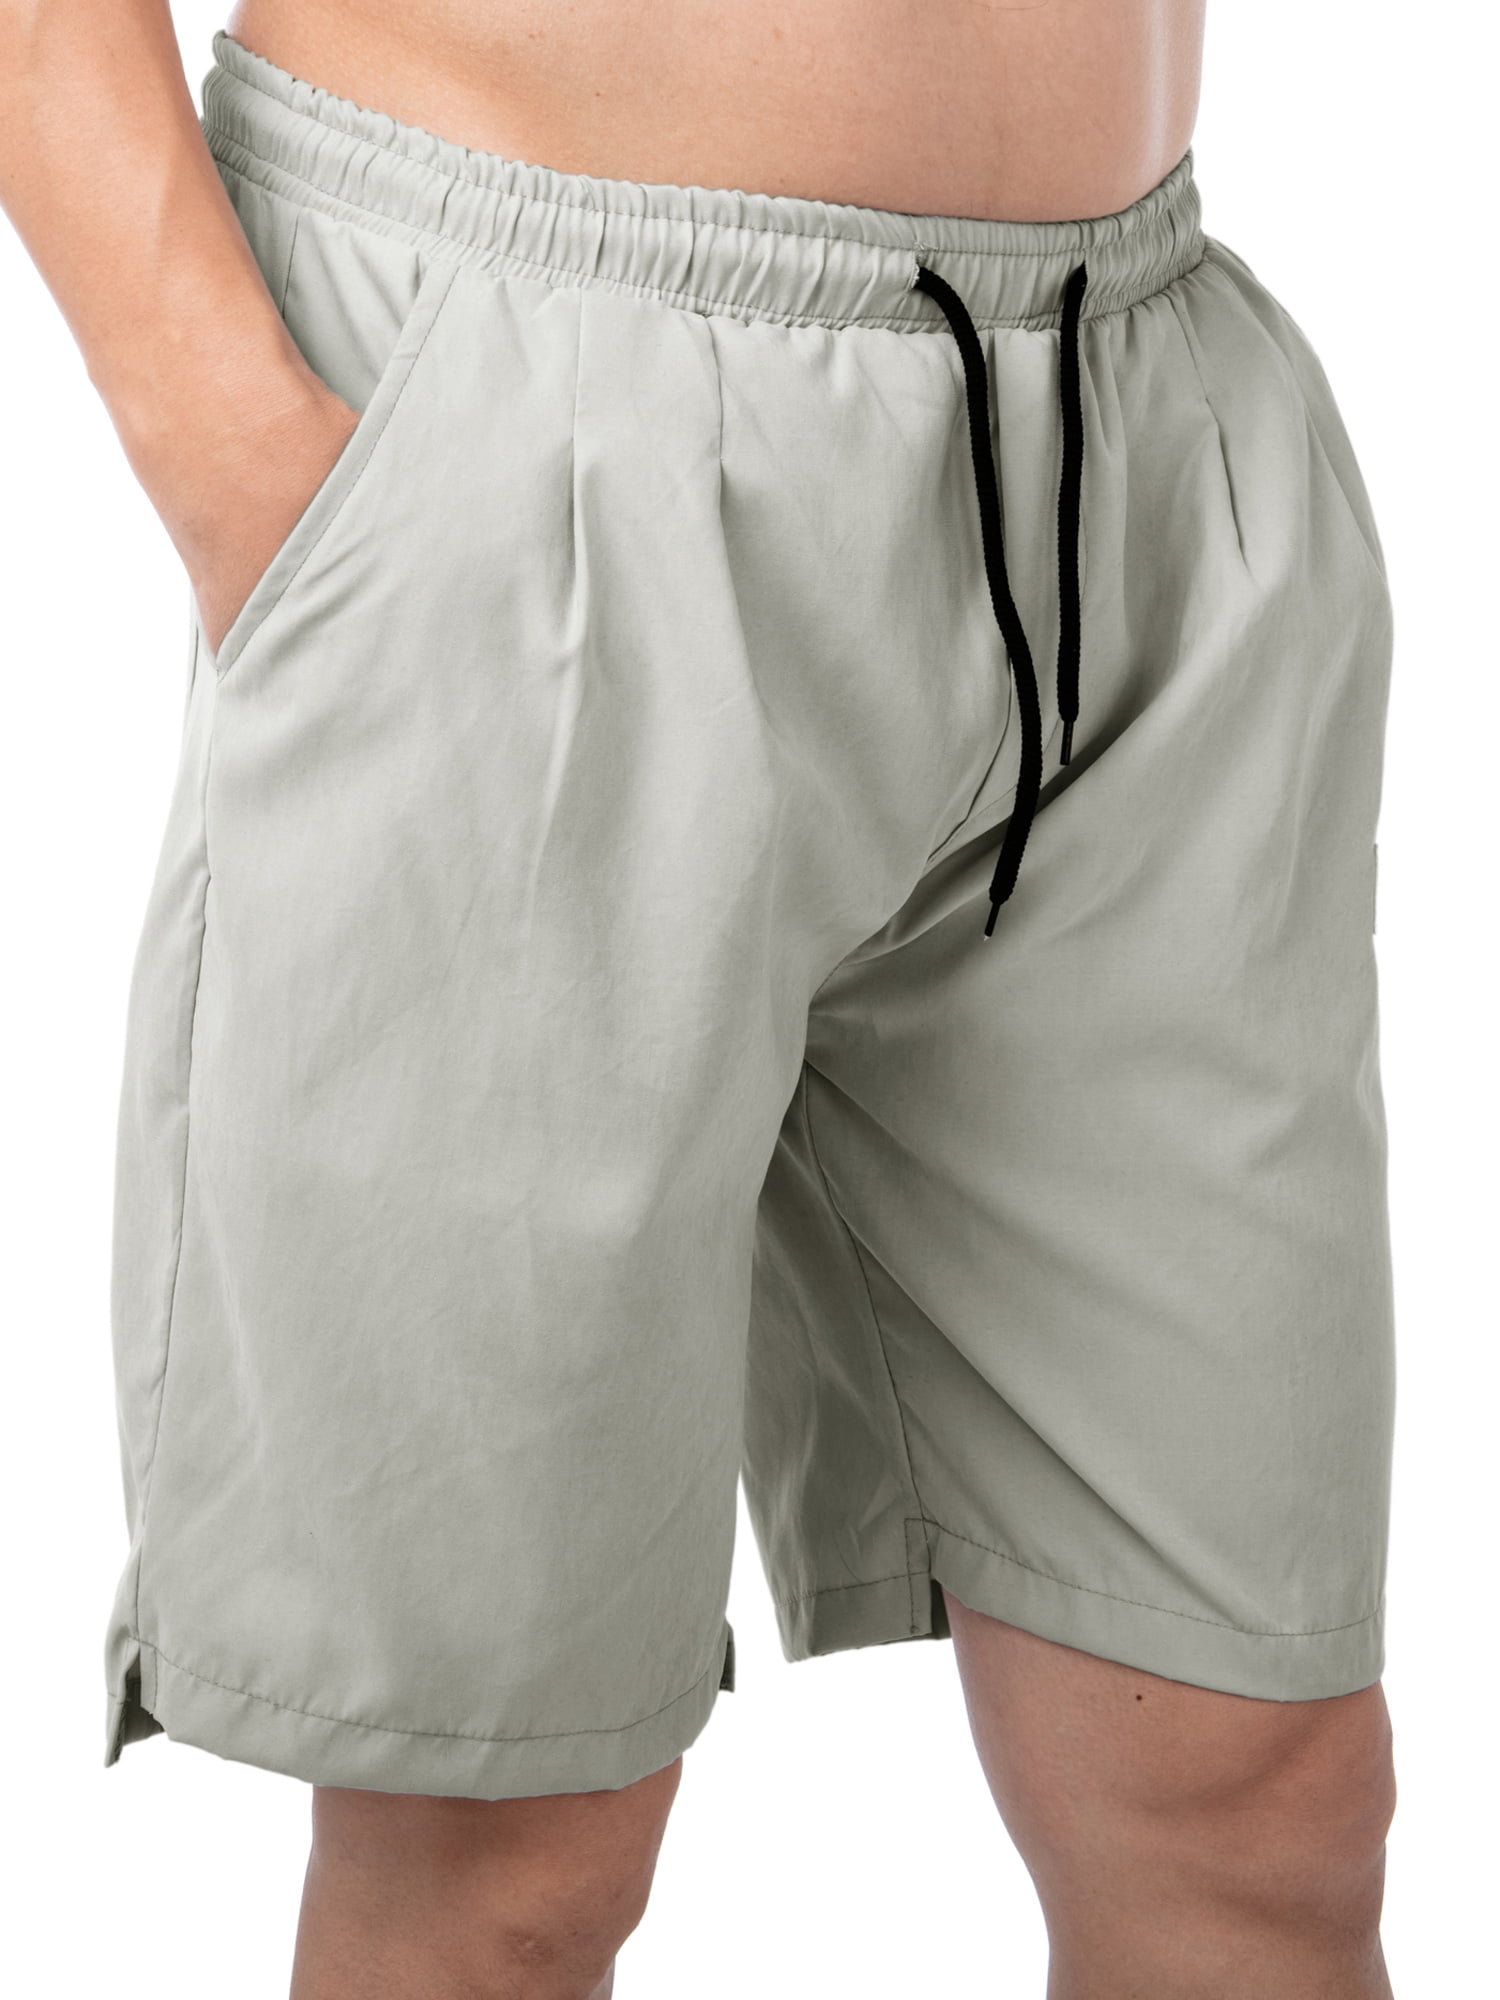 Mens Draw Mermaid Causal Beach Shorts with Elastic Waist Drawstring Lightweight Slim Fit Summer Short Pants with Pockets